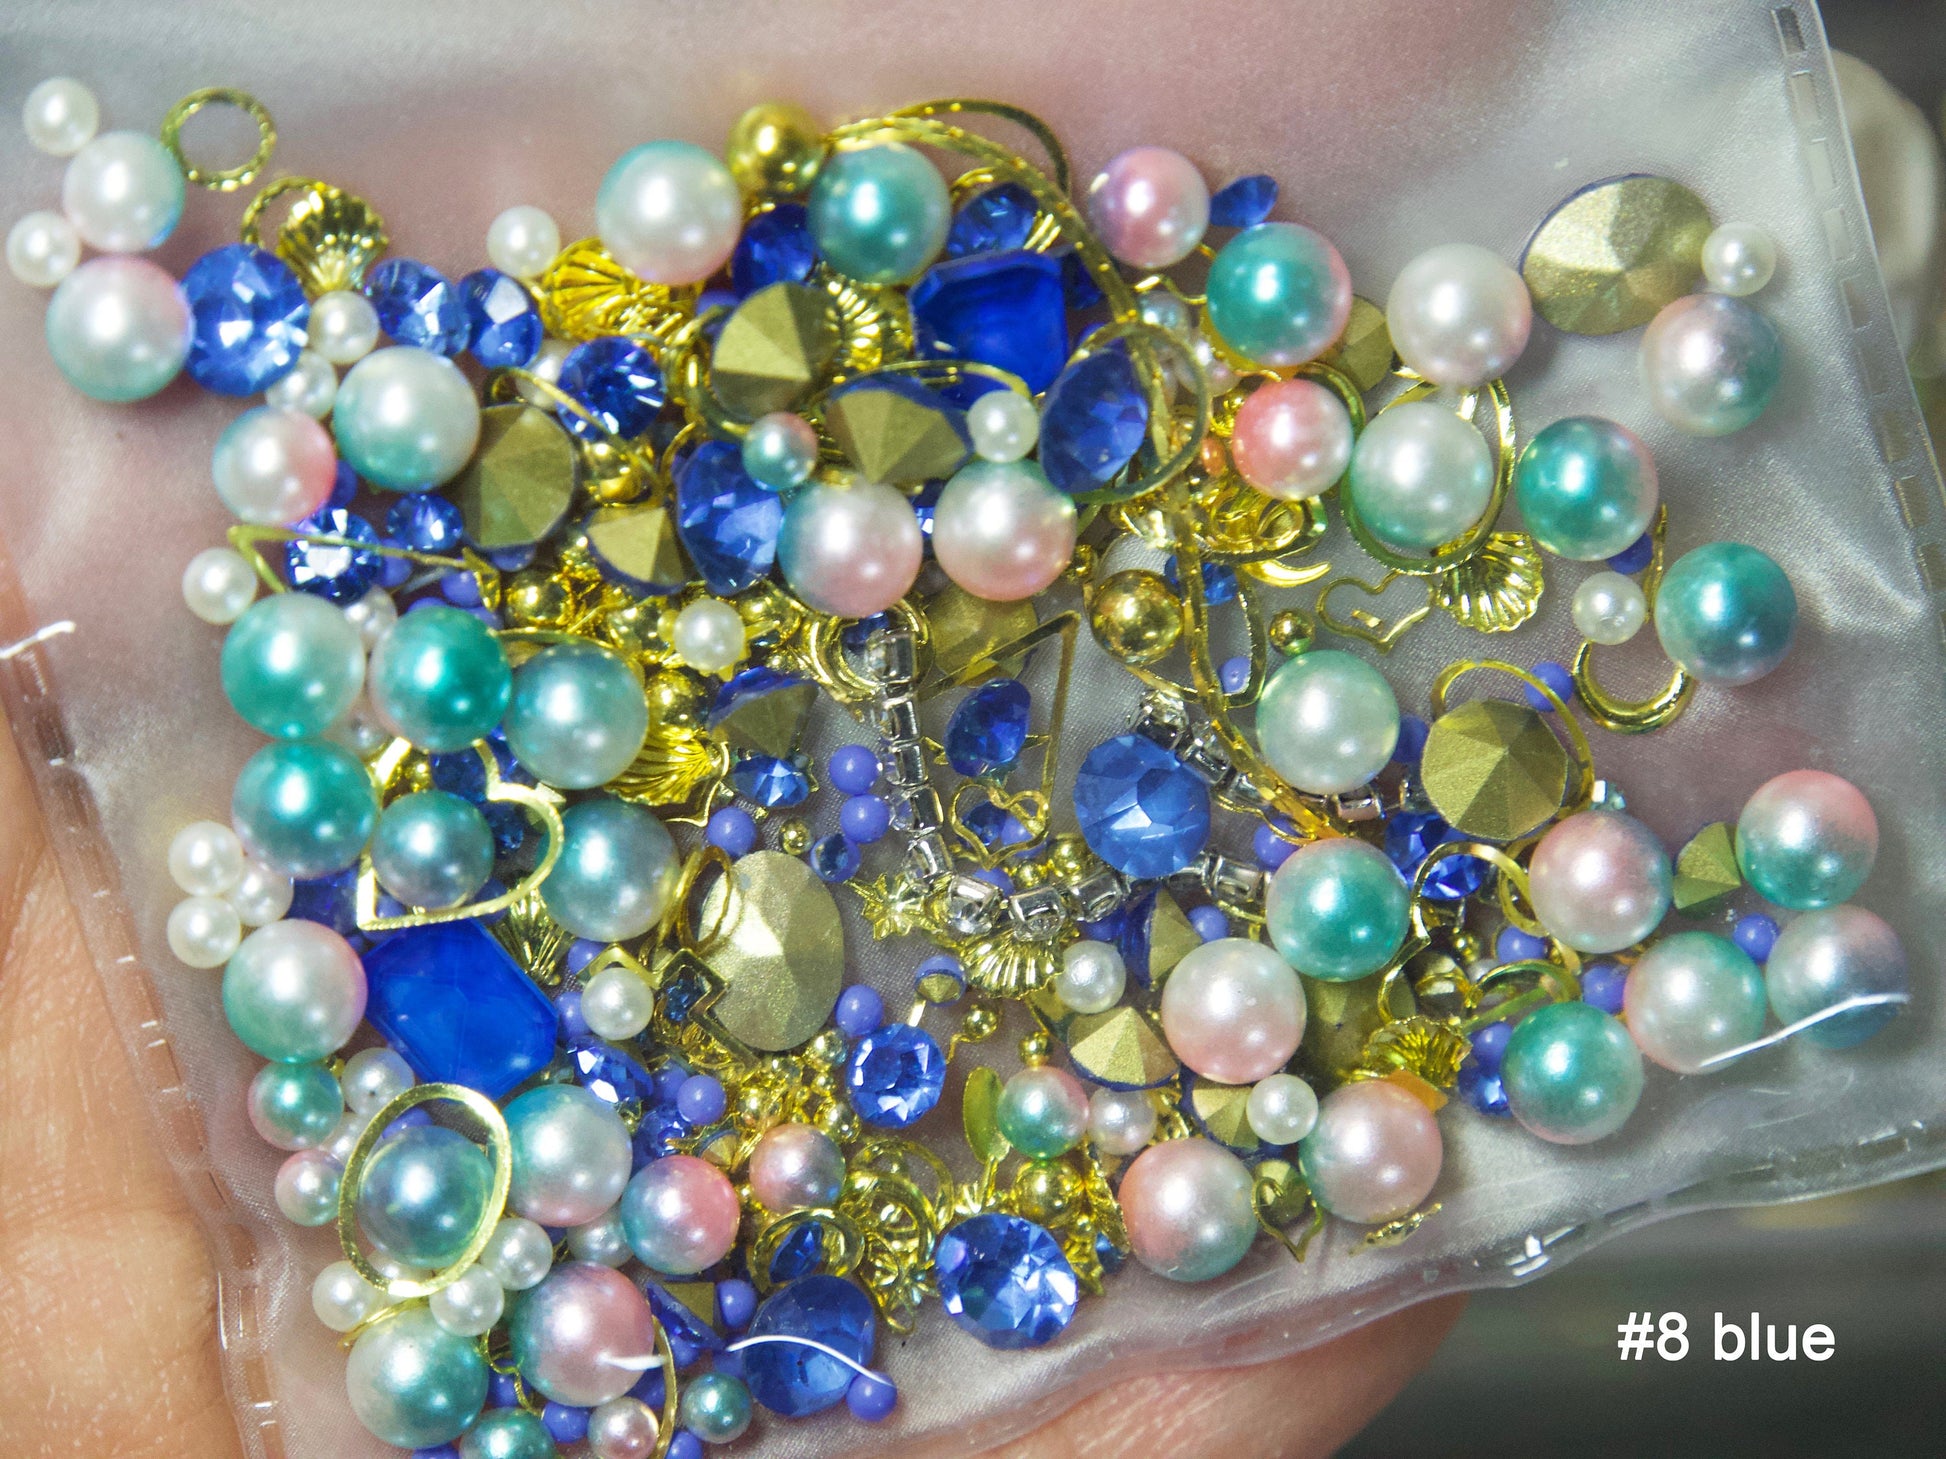 Mixed Pearls Opal Crystals decal/ Mocha Luminous Rhinestones studs 3D Gemstones Resin crafts&nails